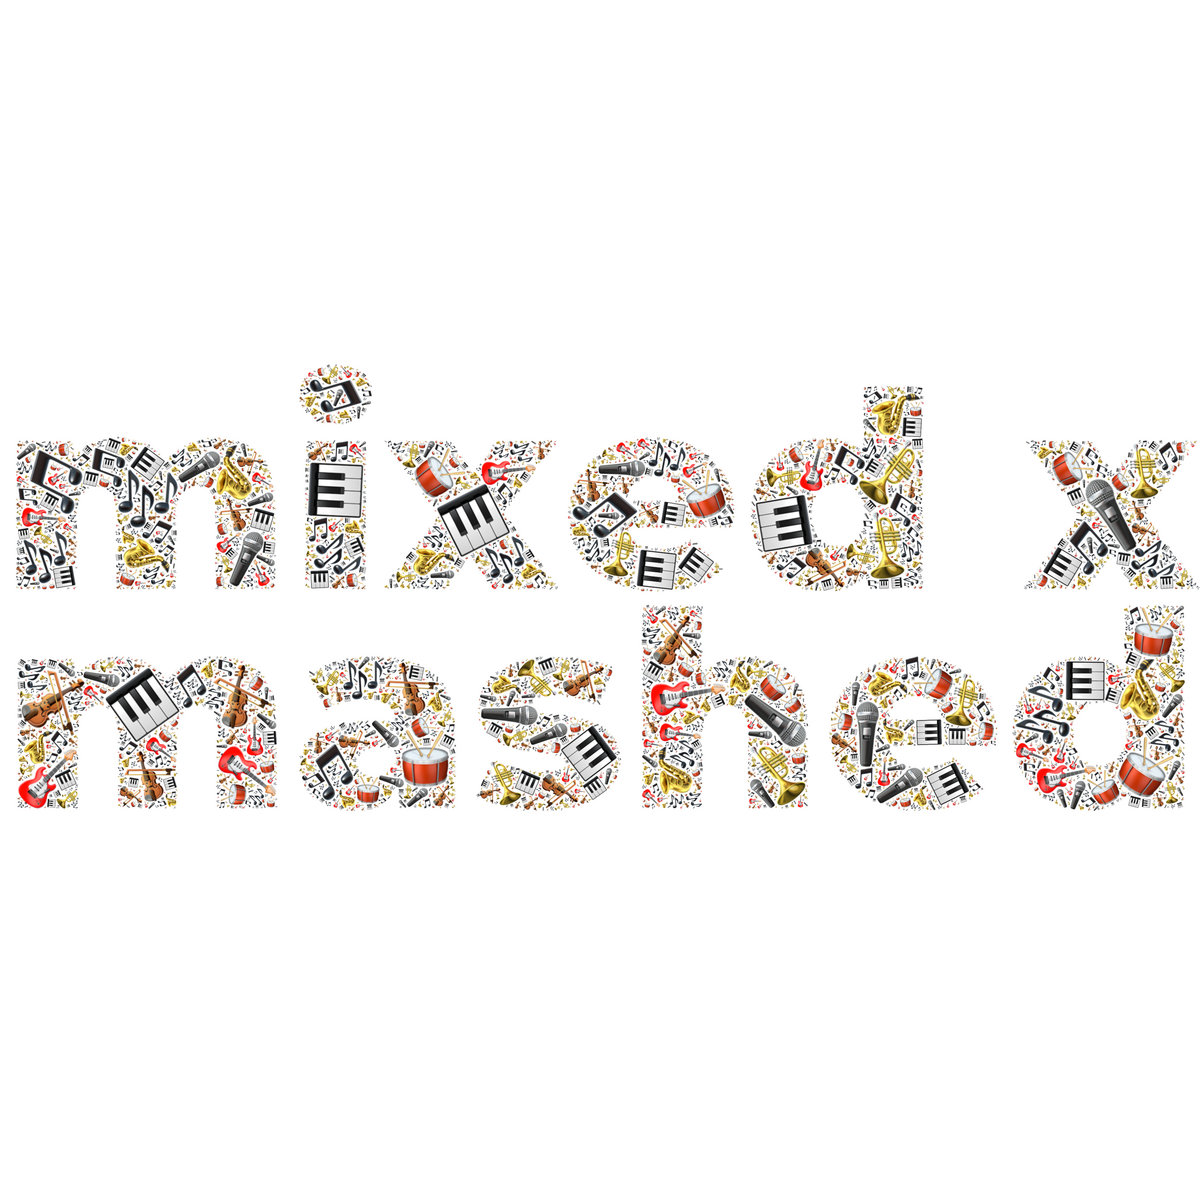 Mixed x mashed Toby Dylan TDYLAN Twinkleboi mashup plunderphonic remix bootleg bastard pop compilation cover Bandcamp